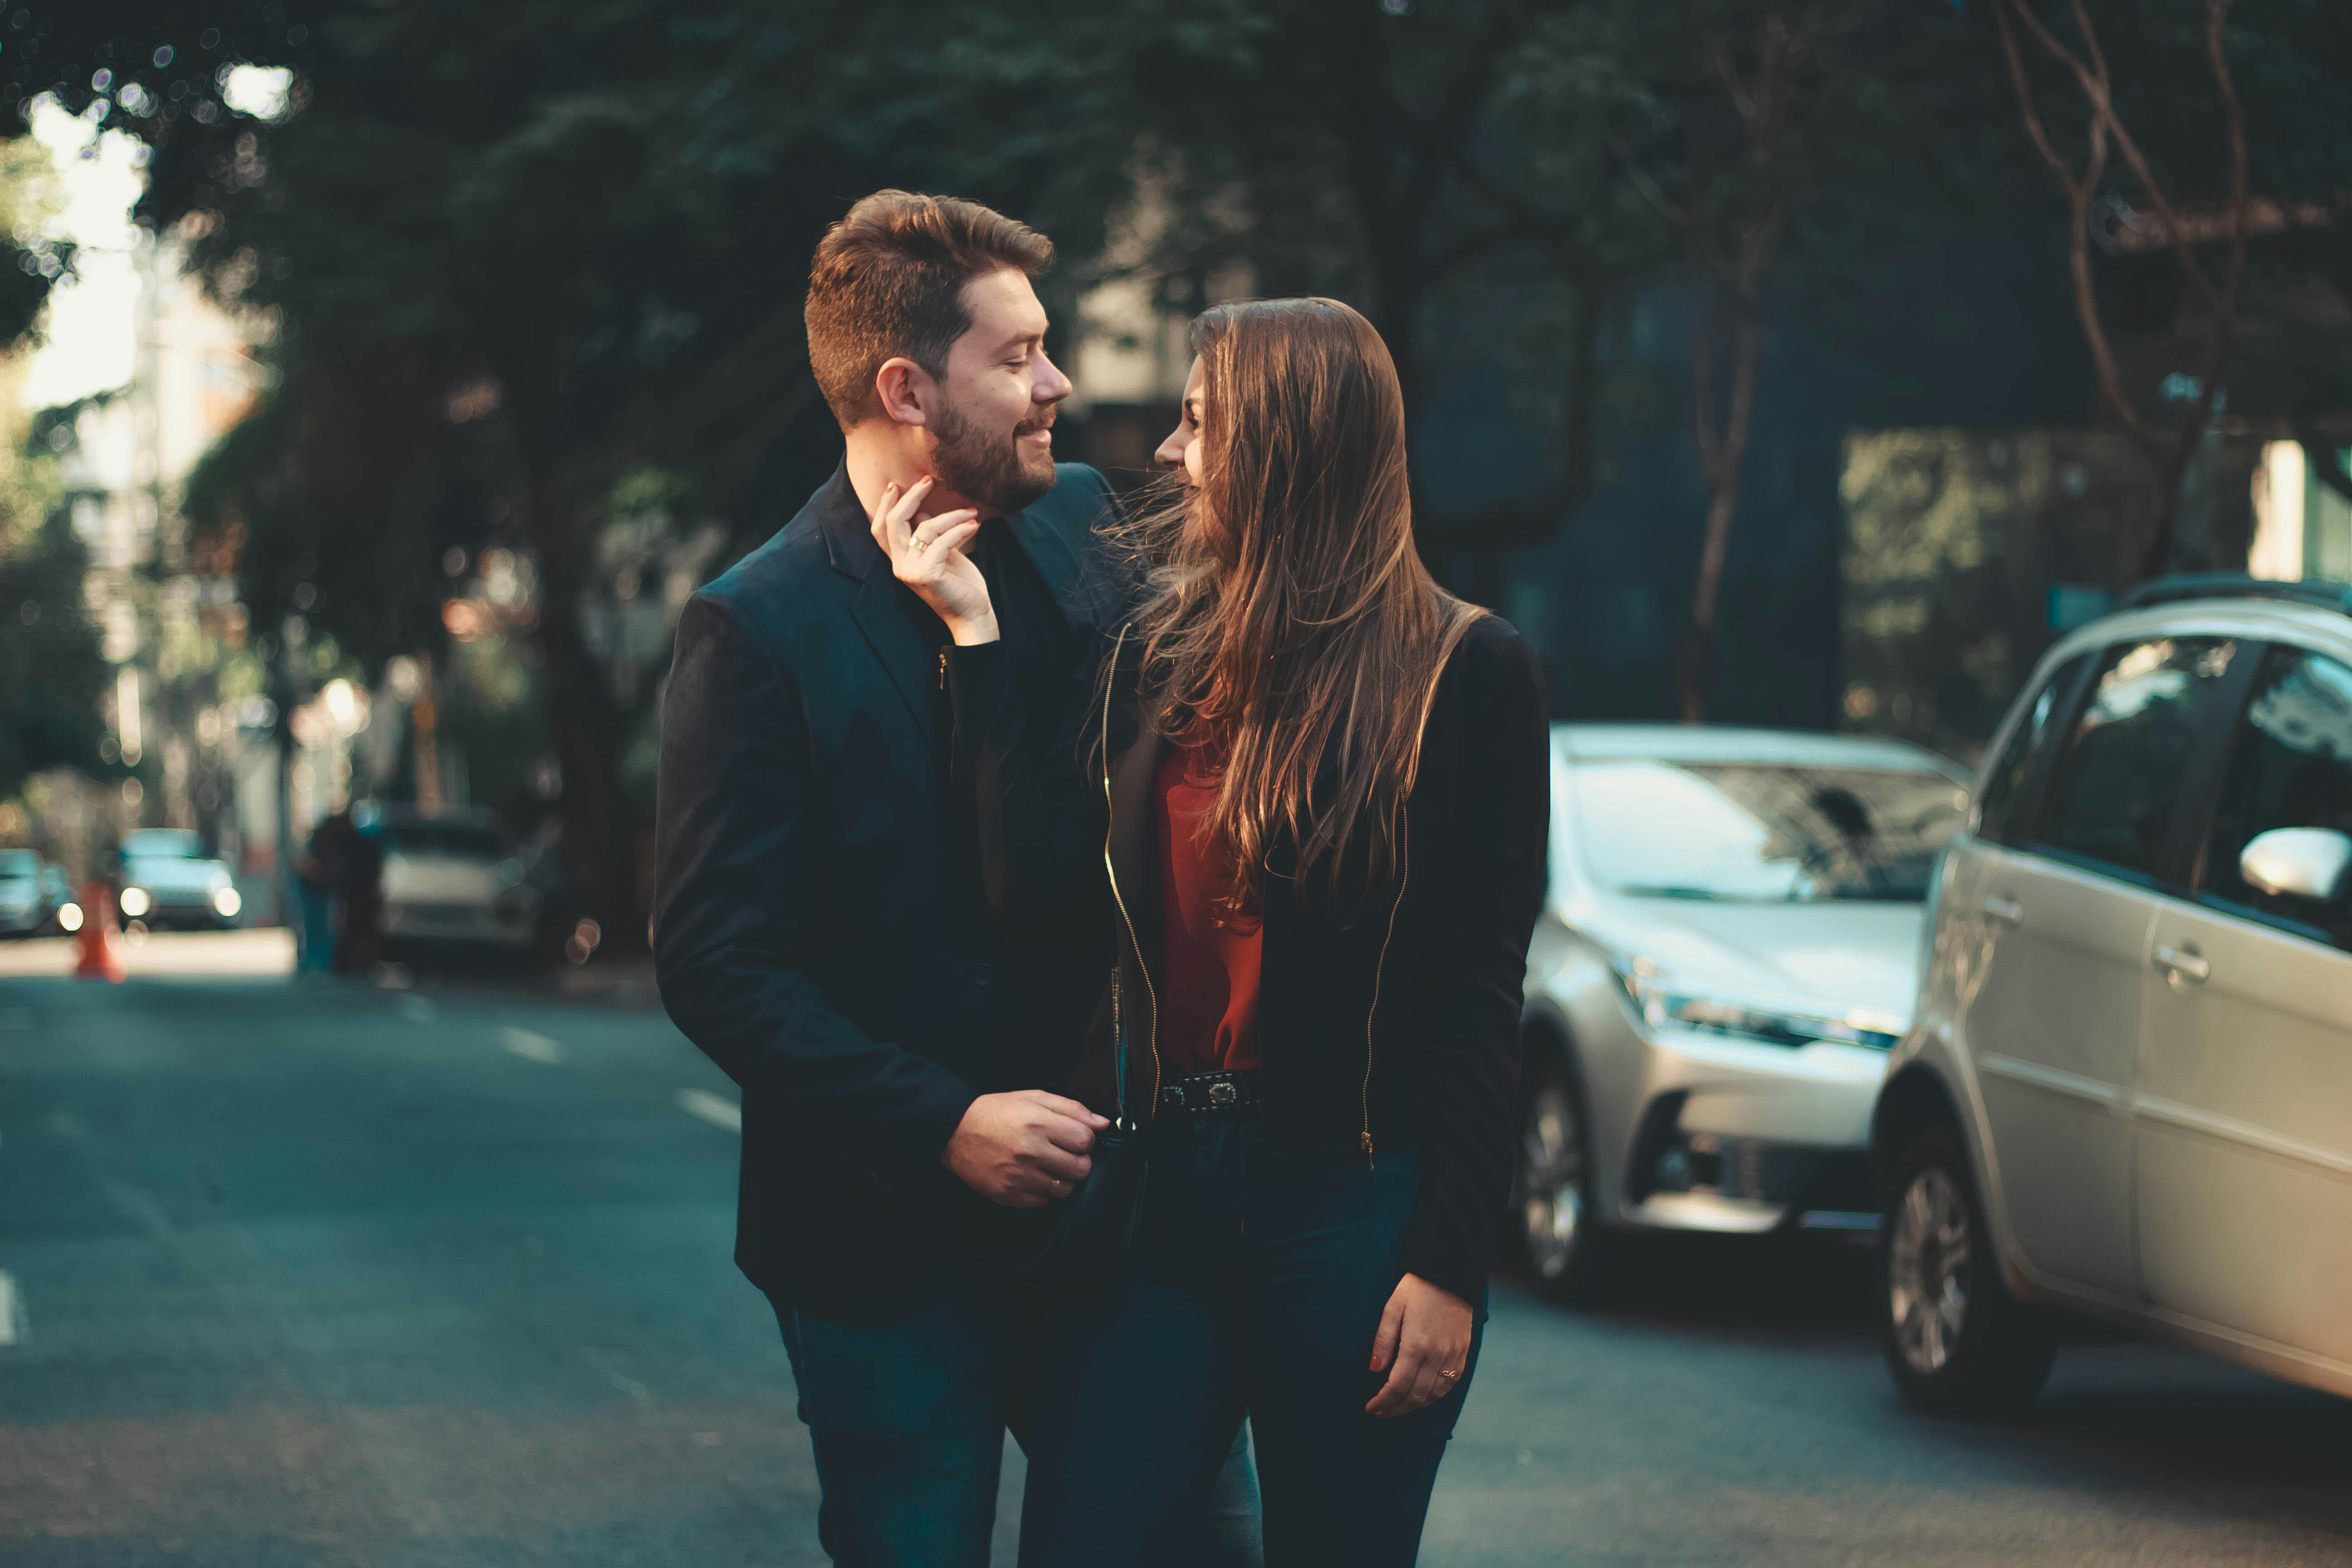 Romantic young couple bonding on street · Free Stock Photo